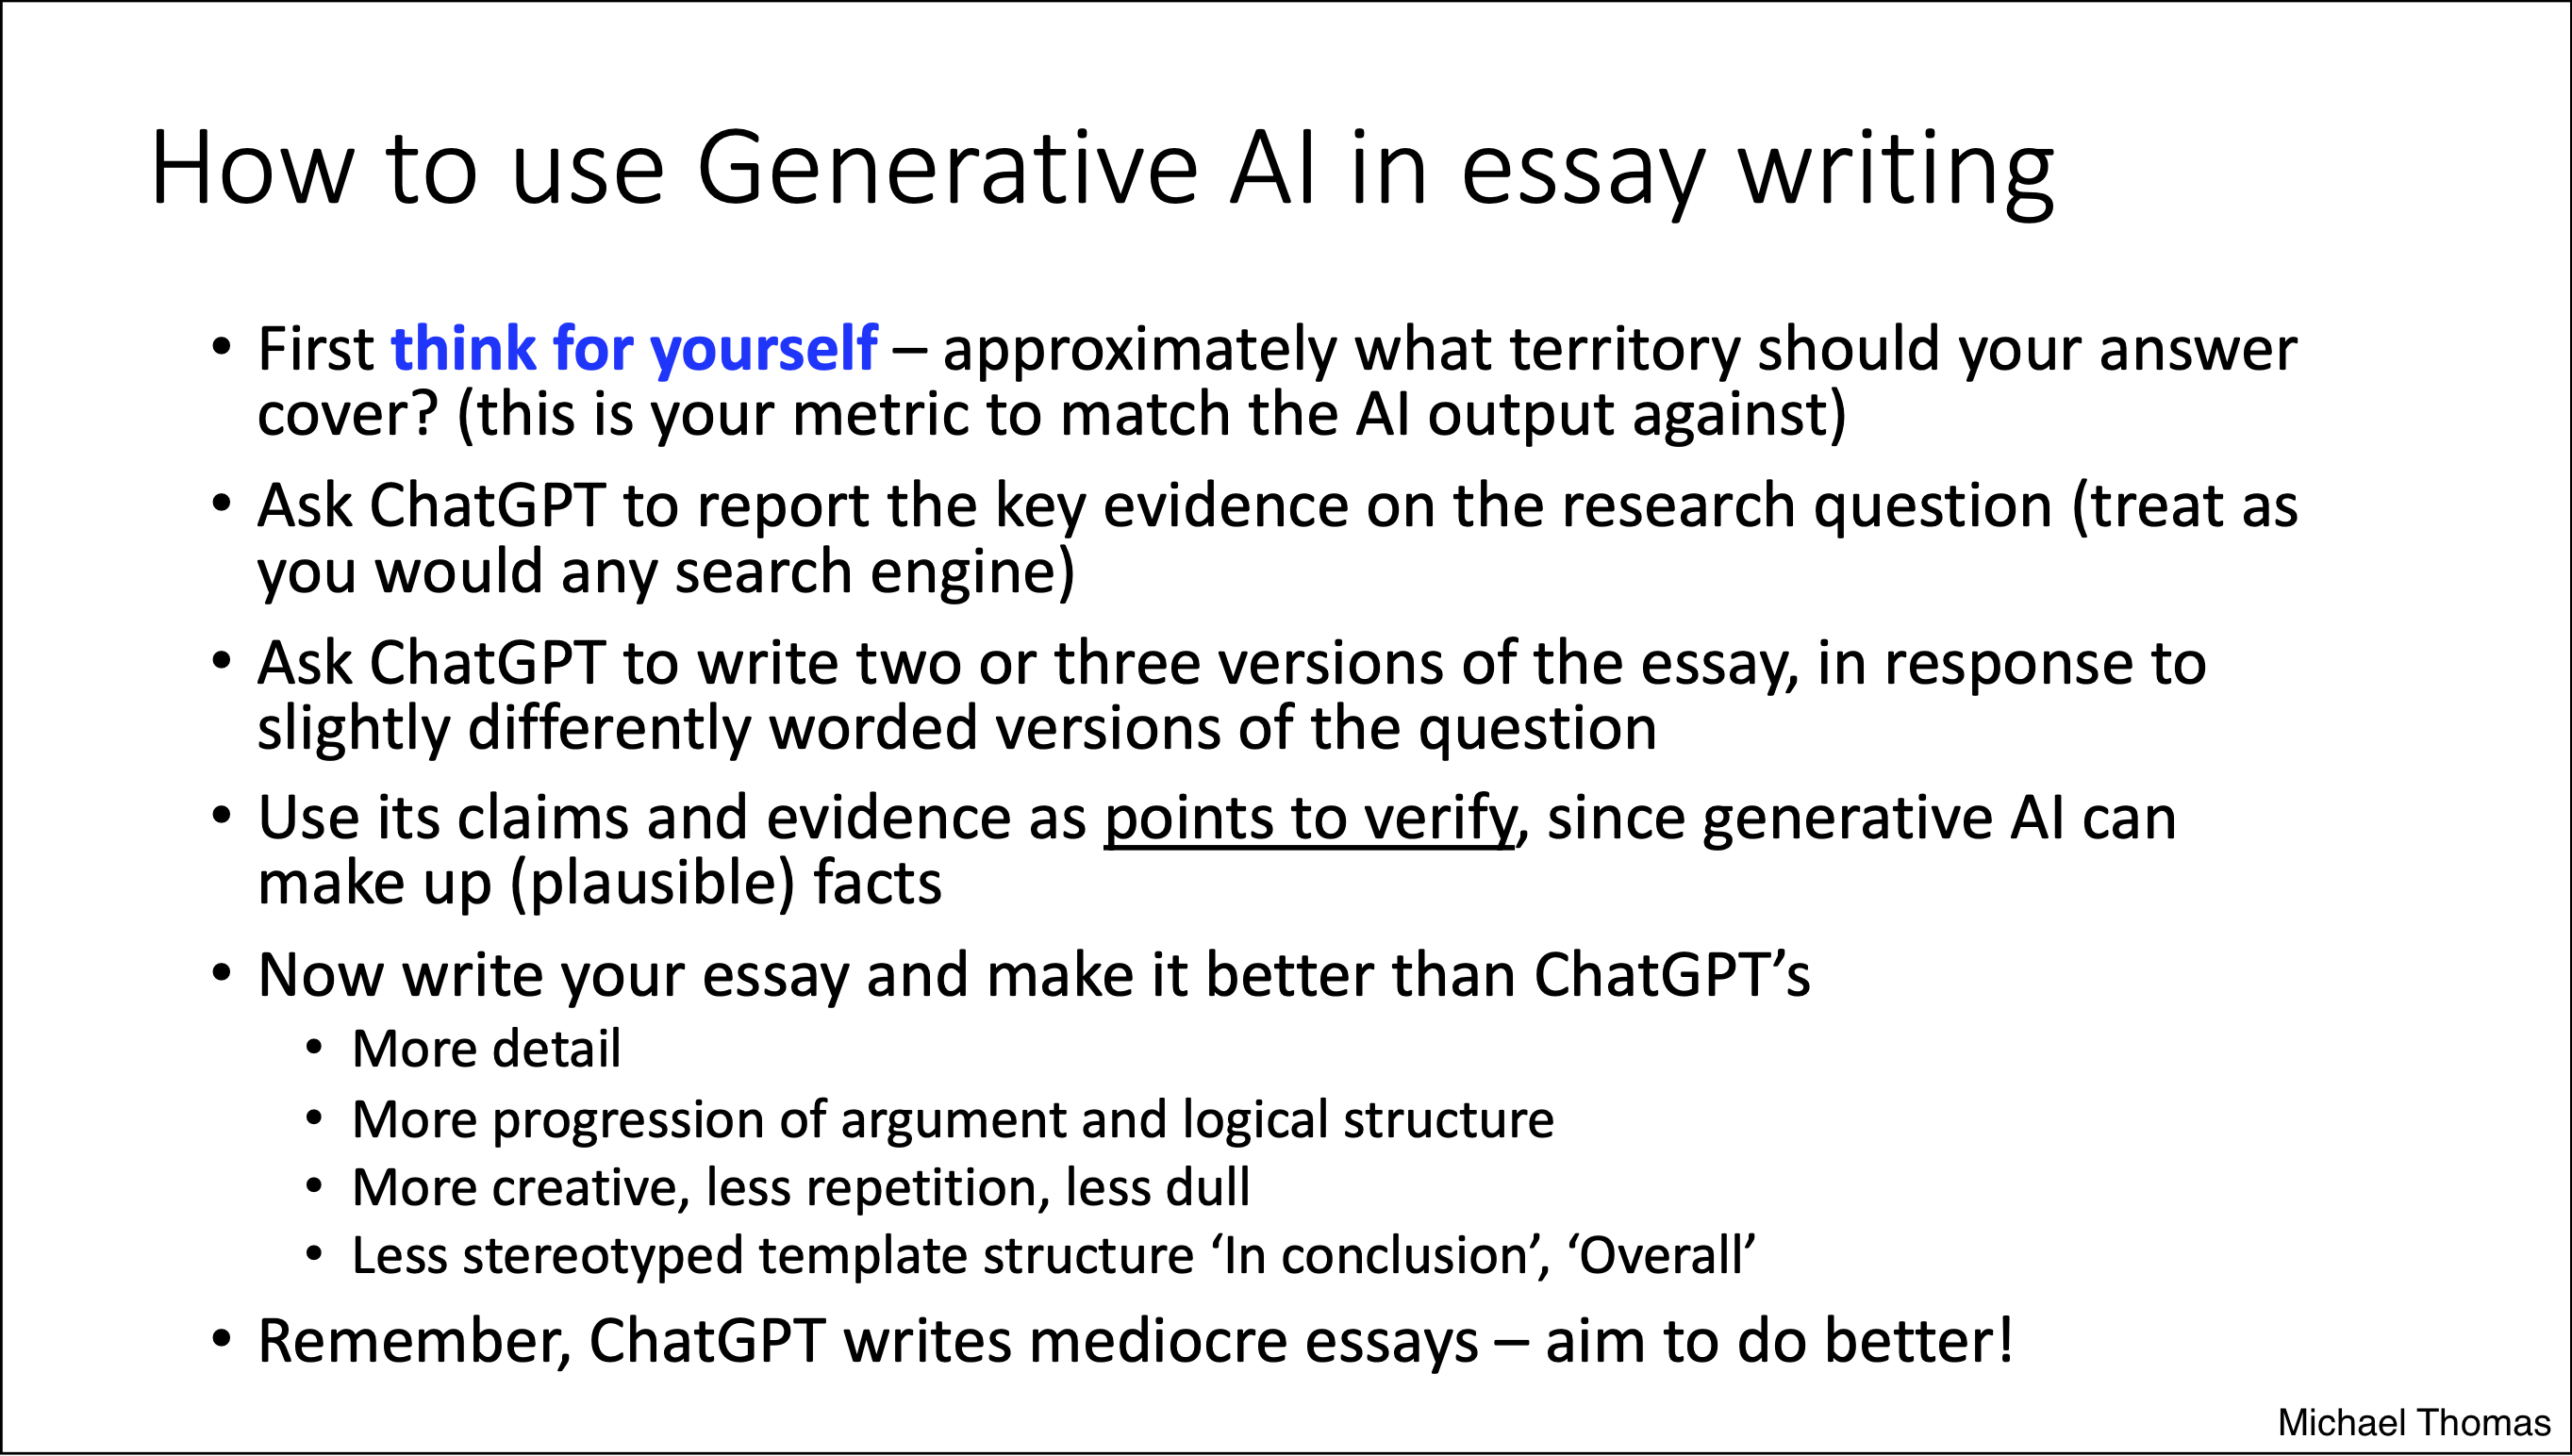 generativeai-and-essay-writing-tips